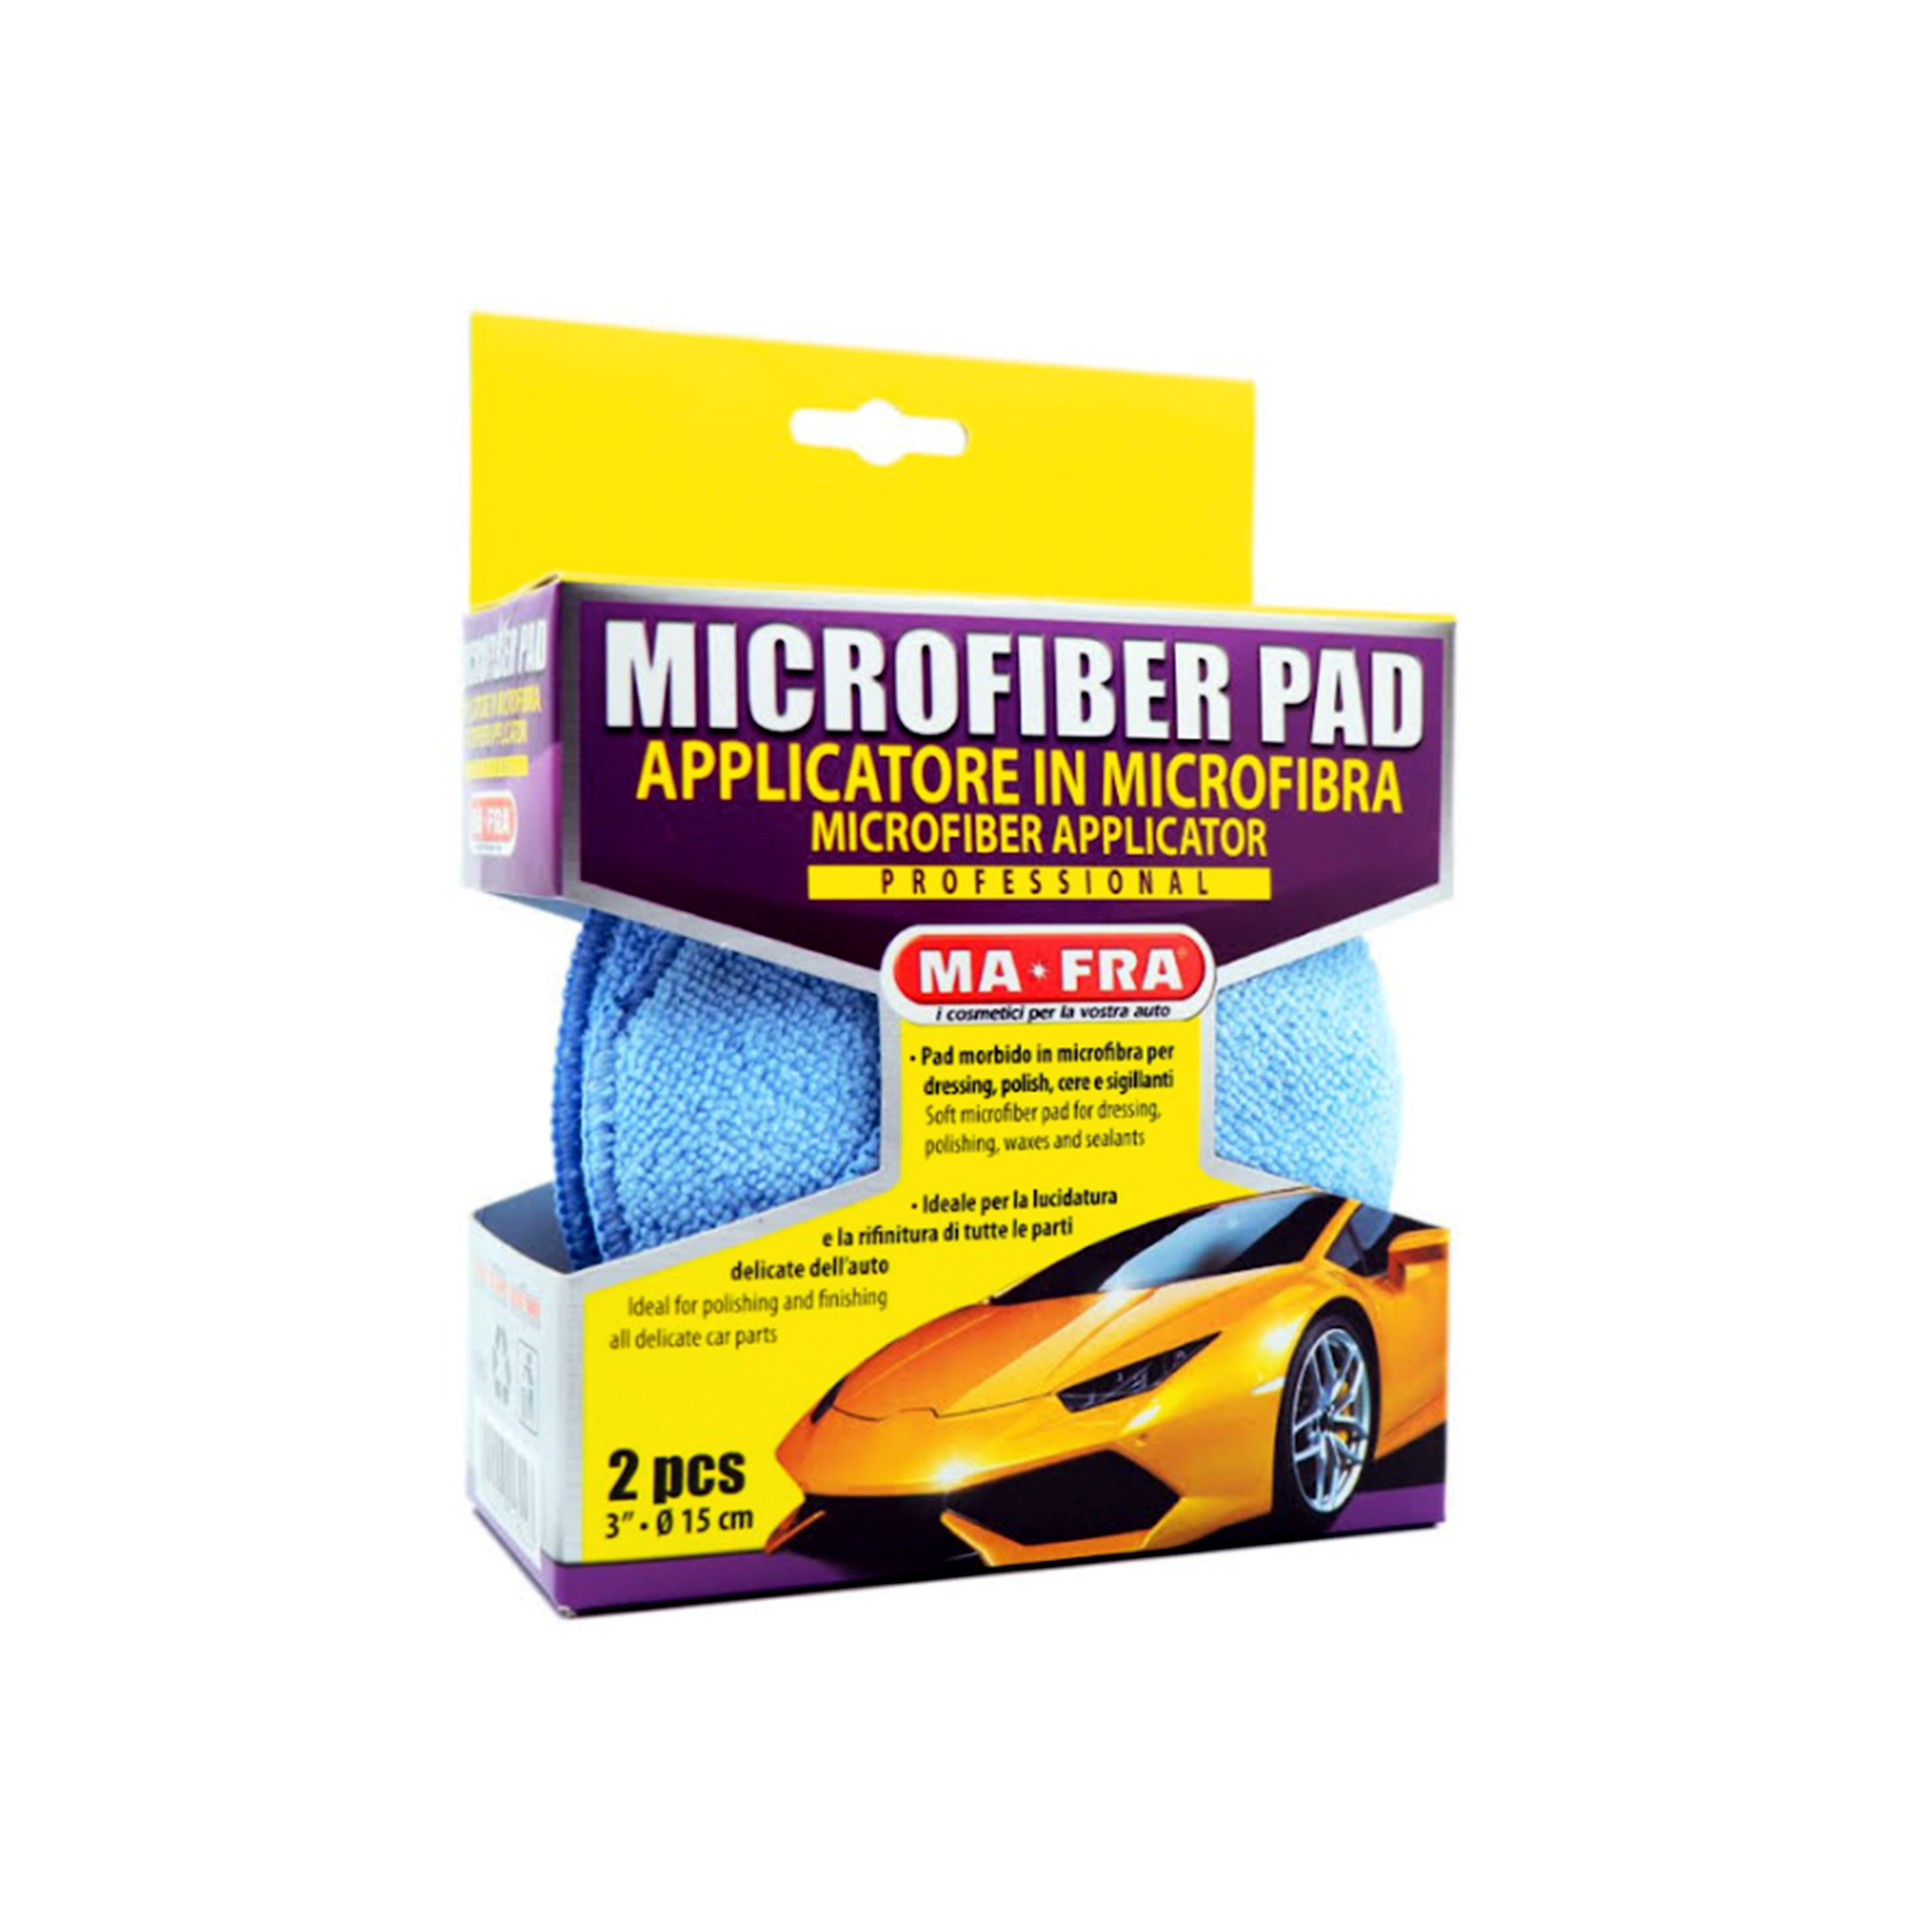 Applikator Mafra Microfiber Pad, 2 pack